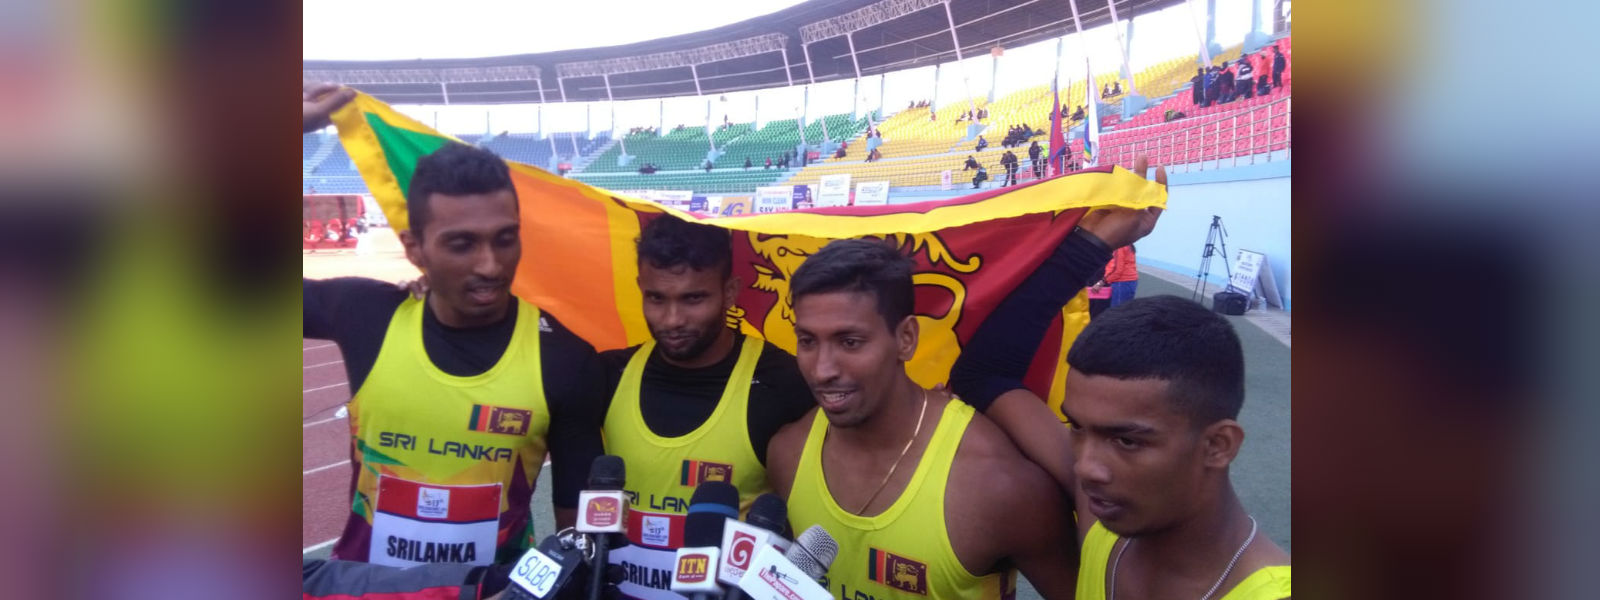 Sri Lankan sprinters set new relay SAG record